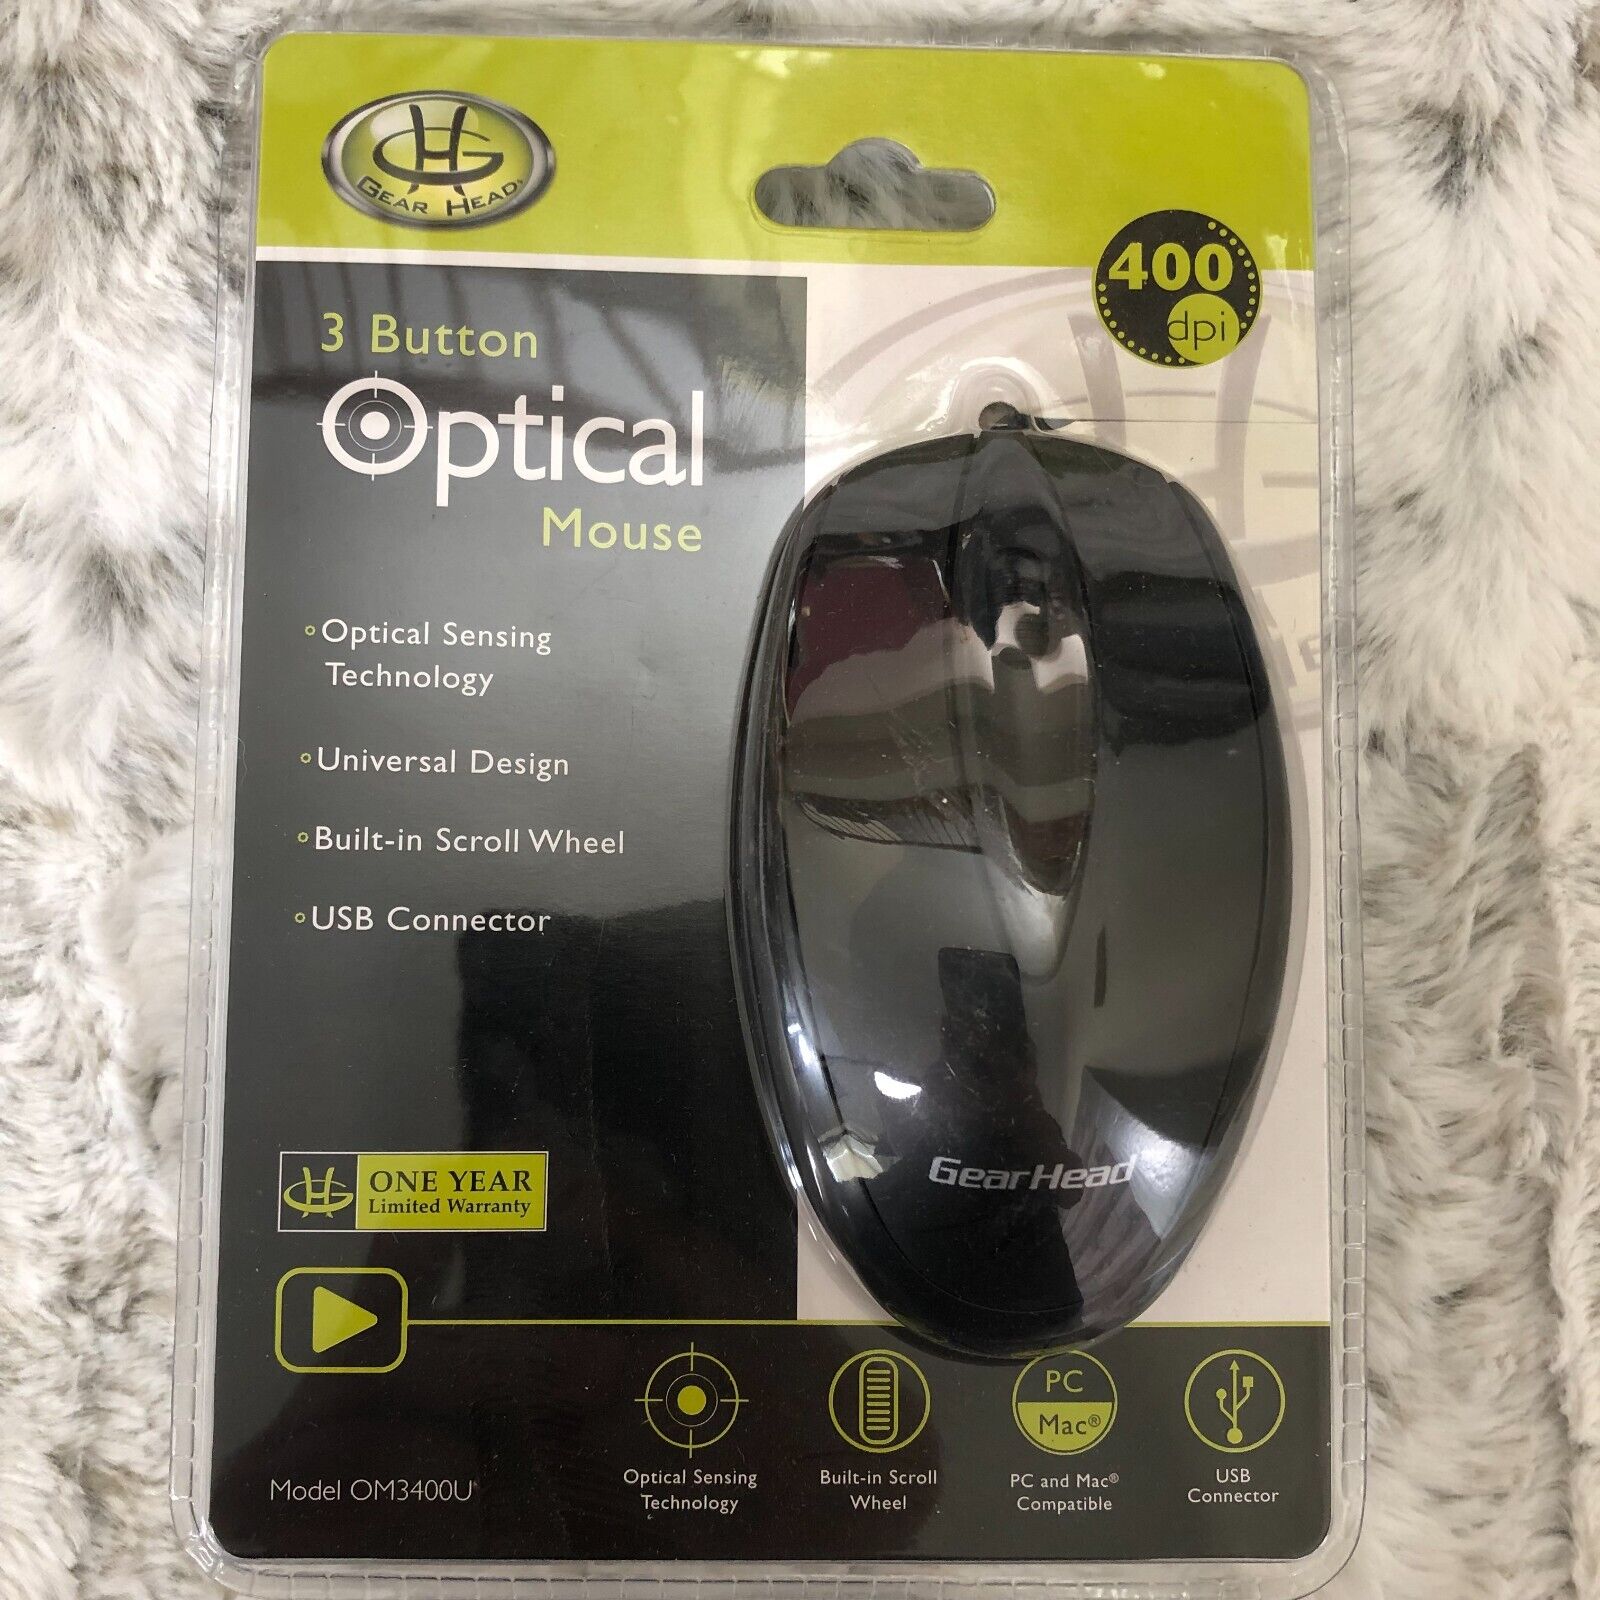 Gear Head 3 Button Optical Mouse Black USB Connector New